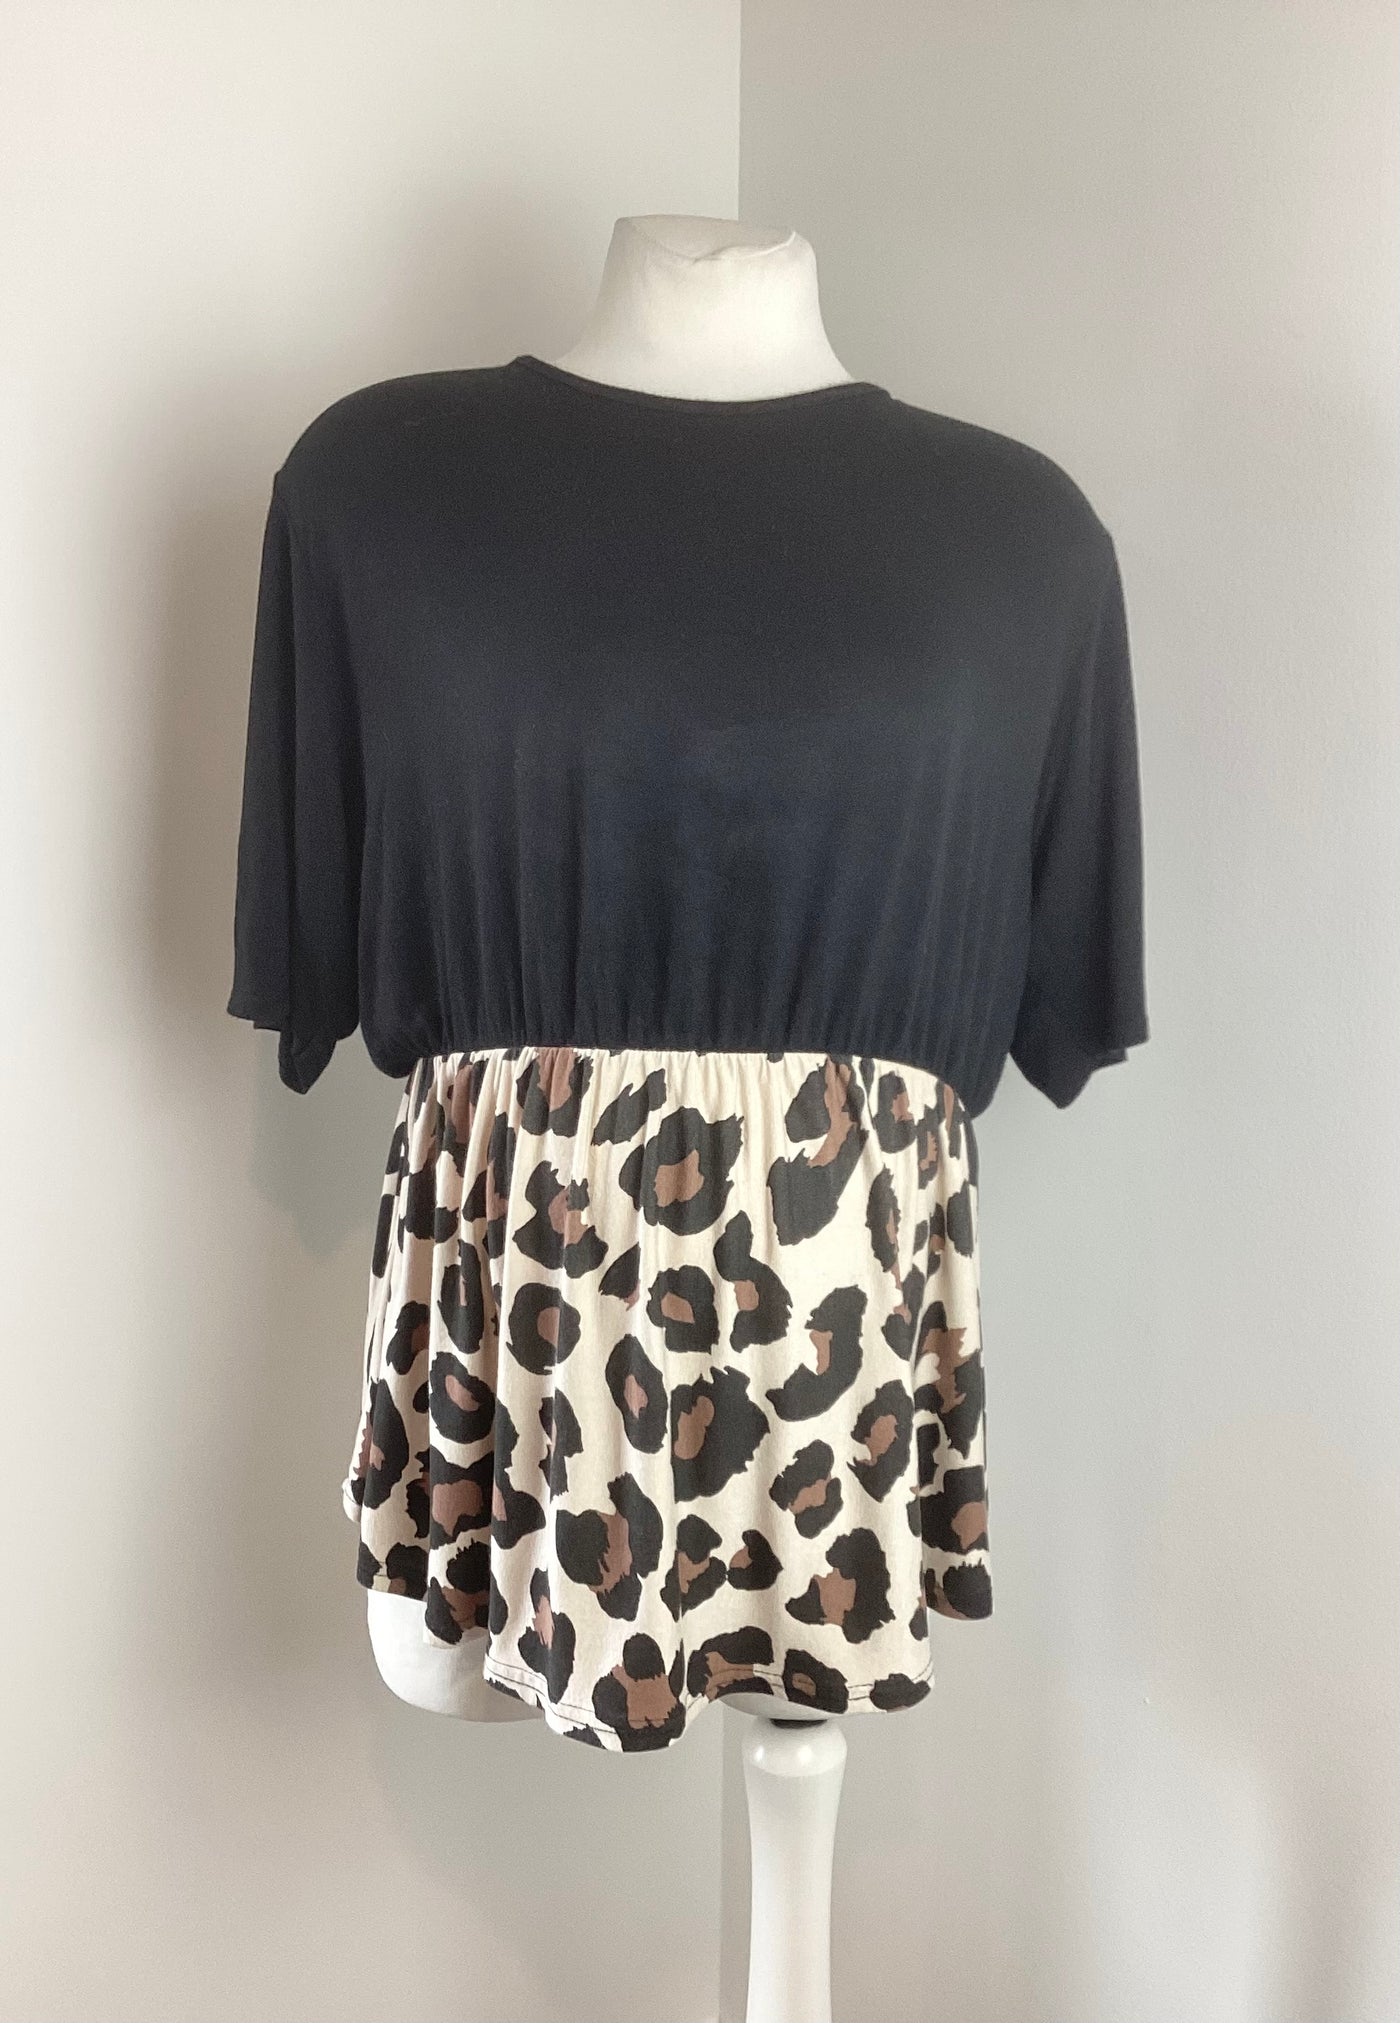 Boohoo Maternity black & leopard print short sleeved top - Size 18 (more like 16/18)